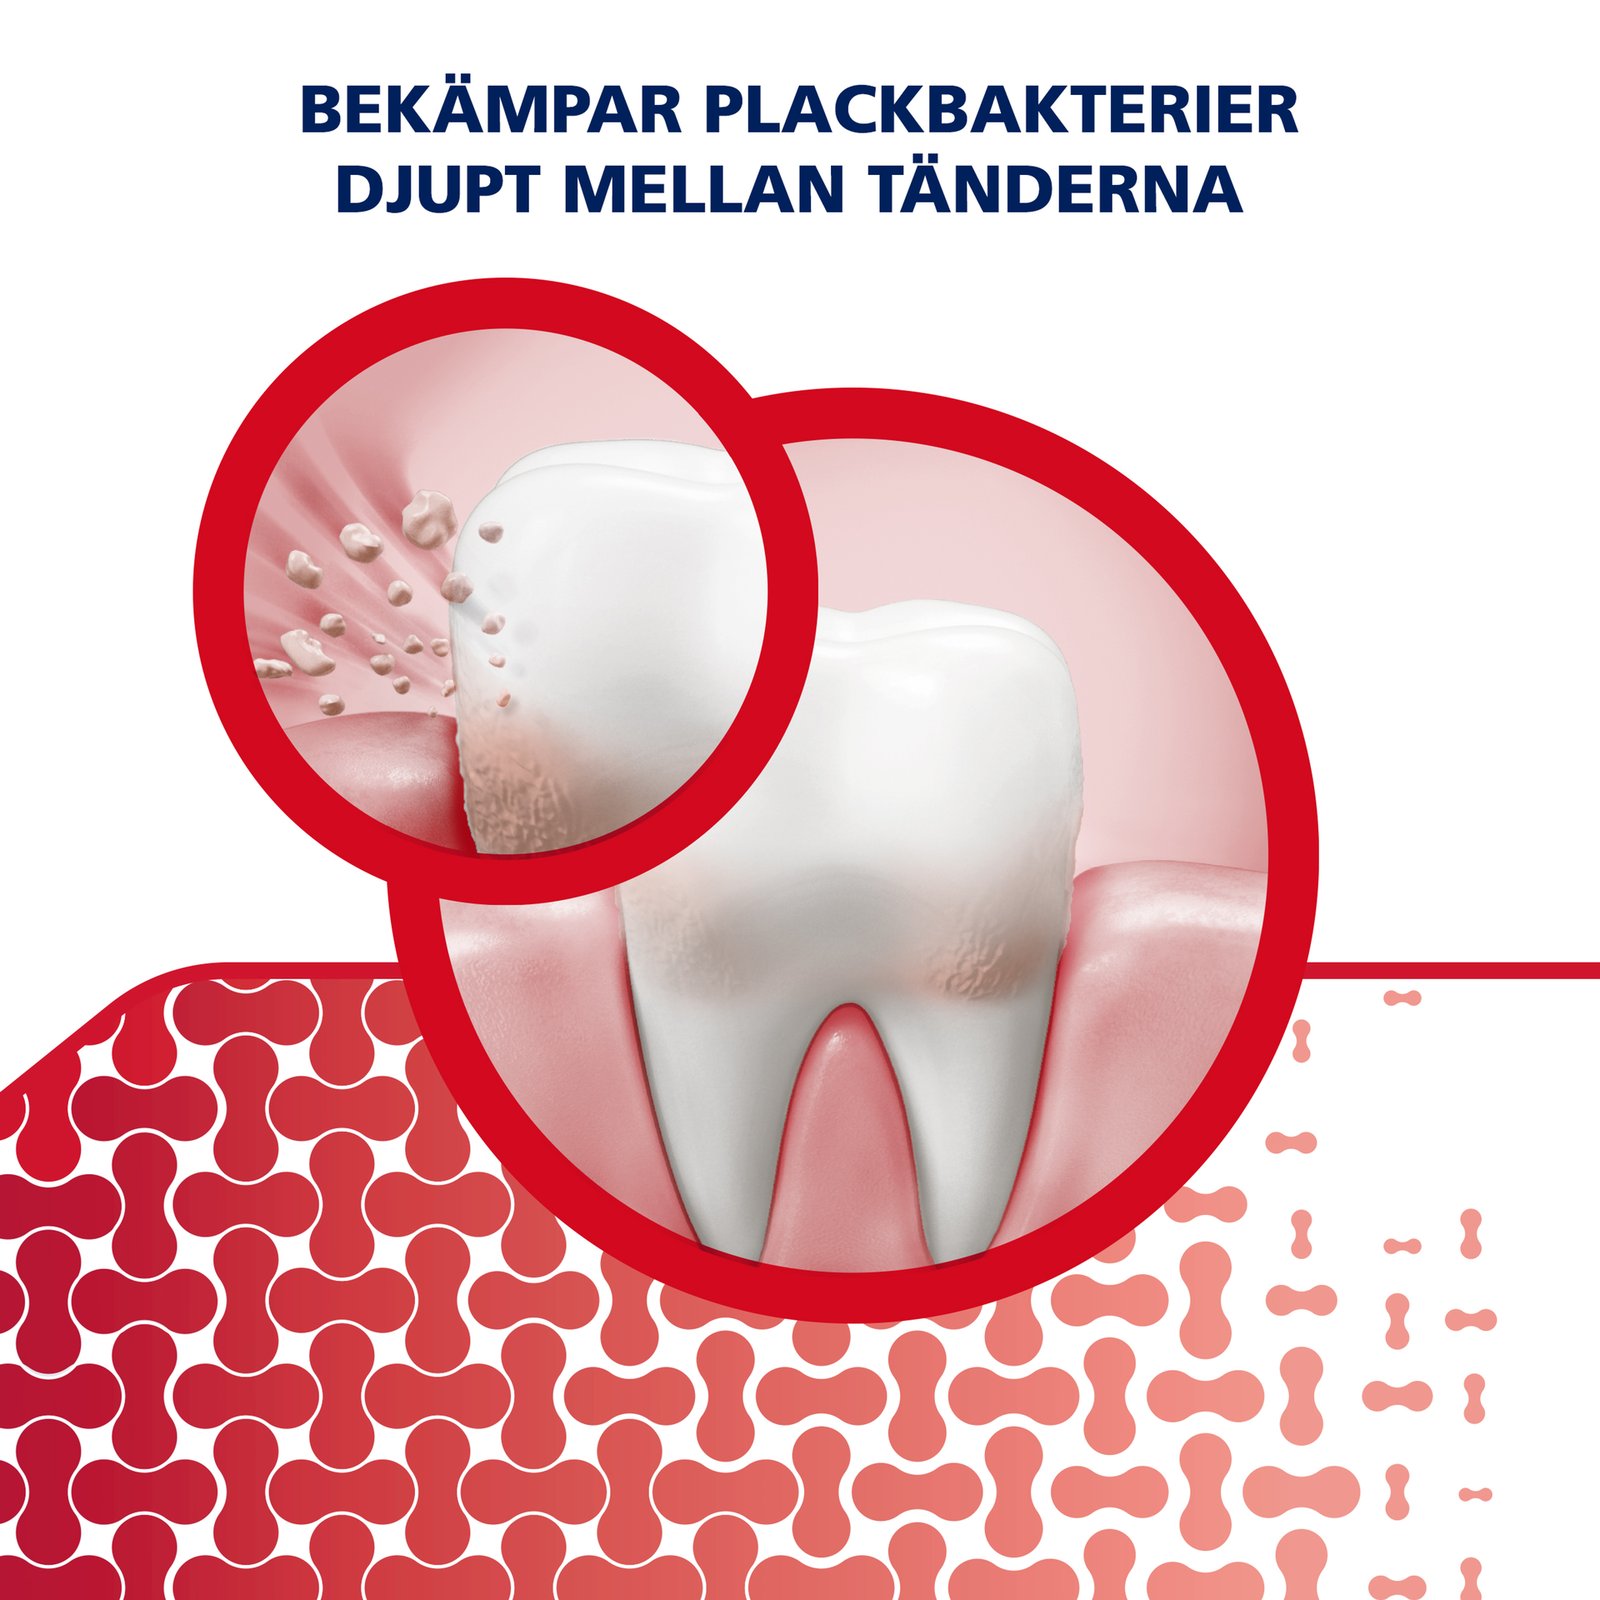 Parodontax Gum+ Sensitivity & Breath Tandkräm 75 ml